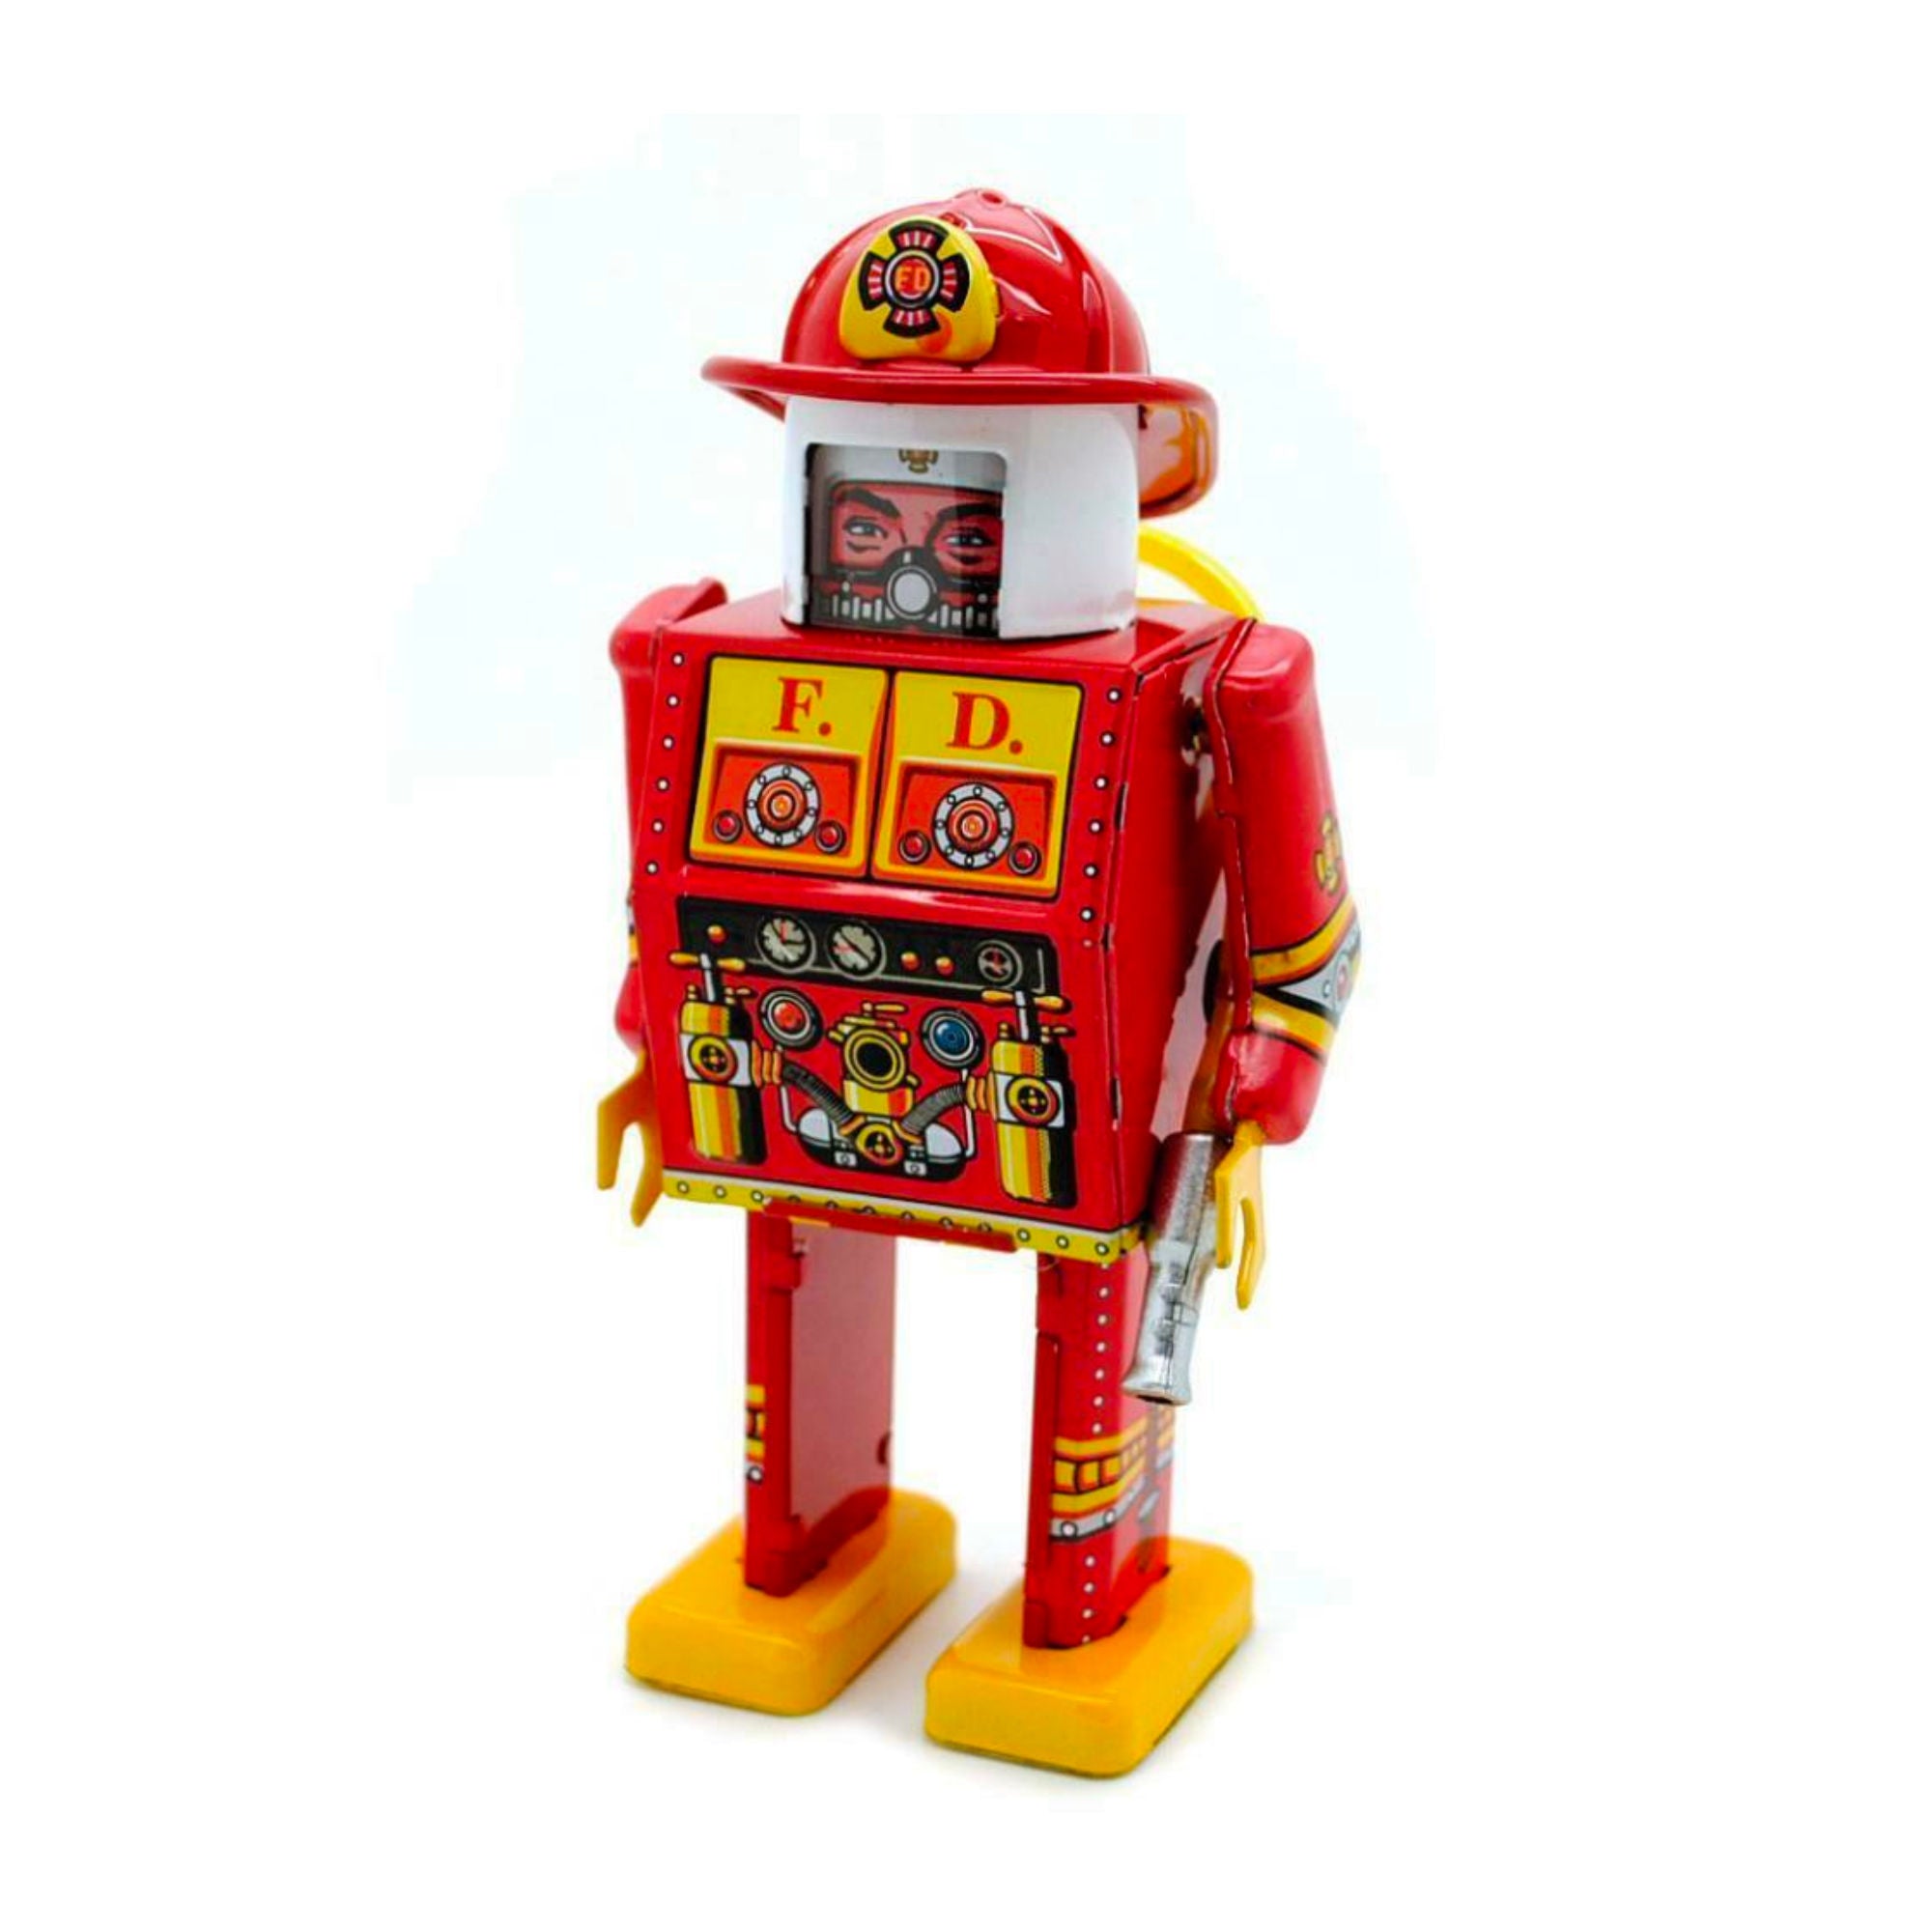 Saint John Robot Fire Captain Windup Toy